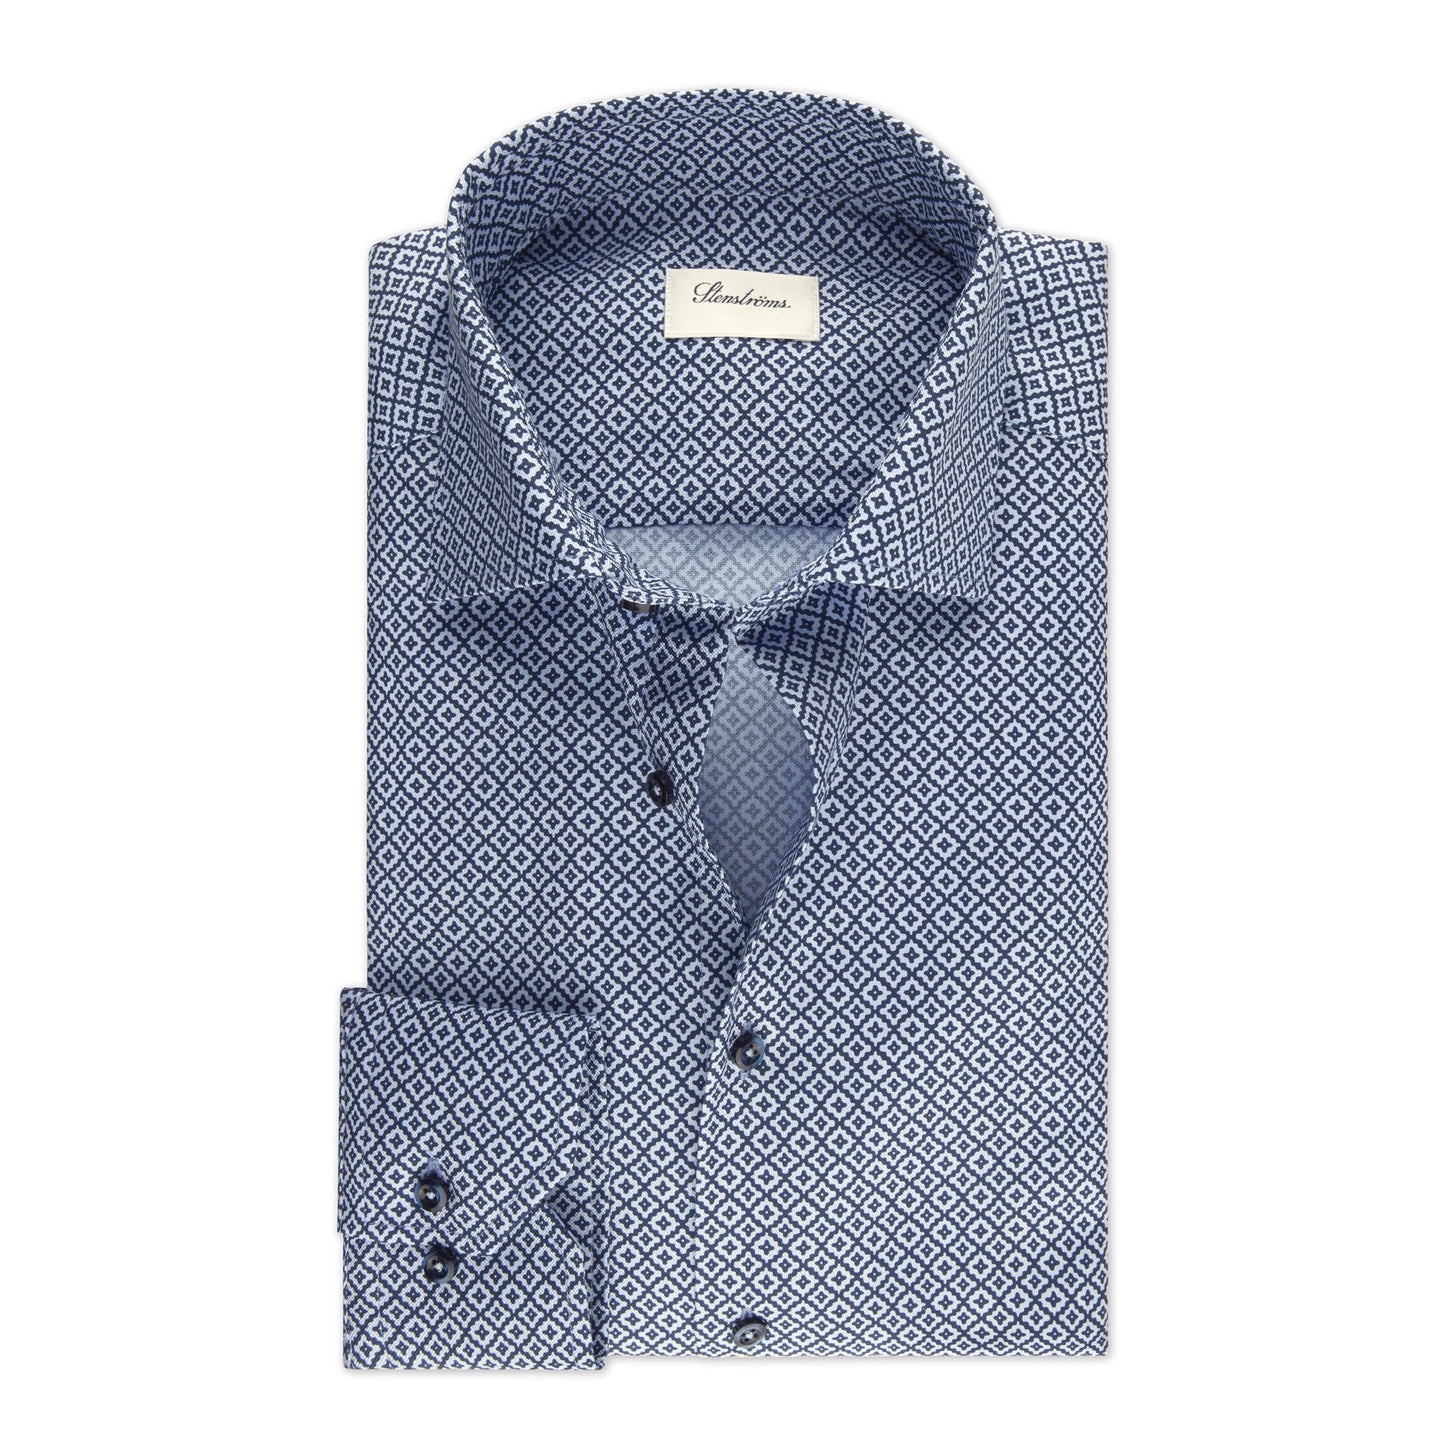 Stenstroms Blue Patterned Oxford Shirt